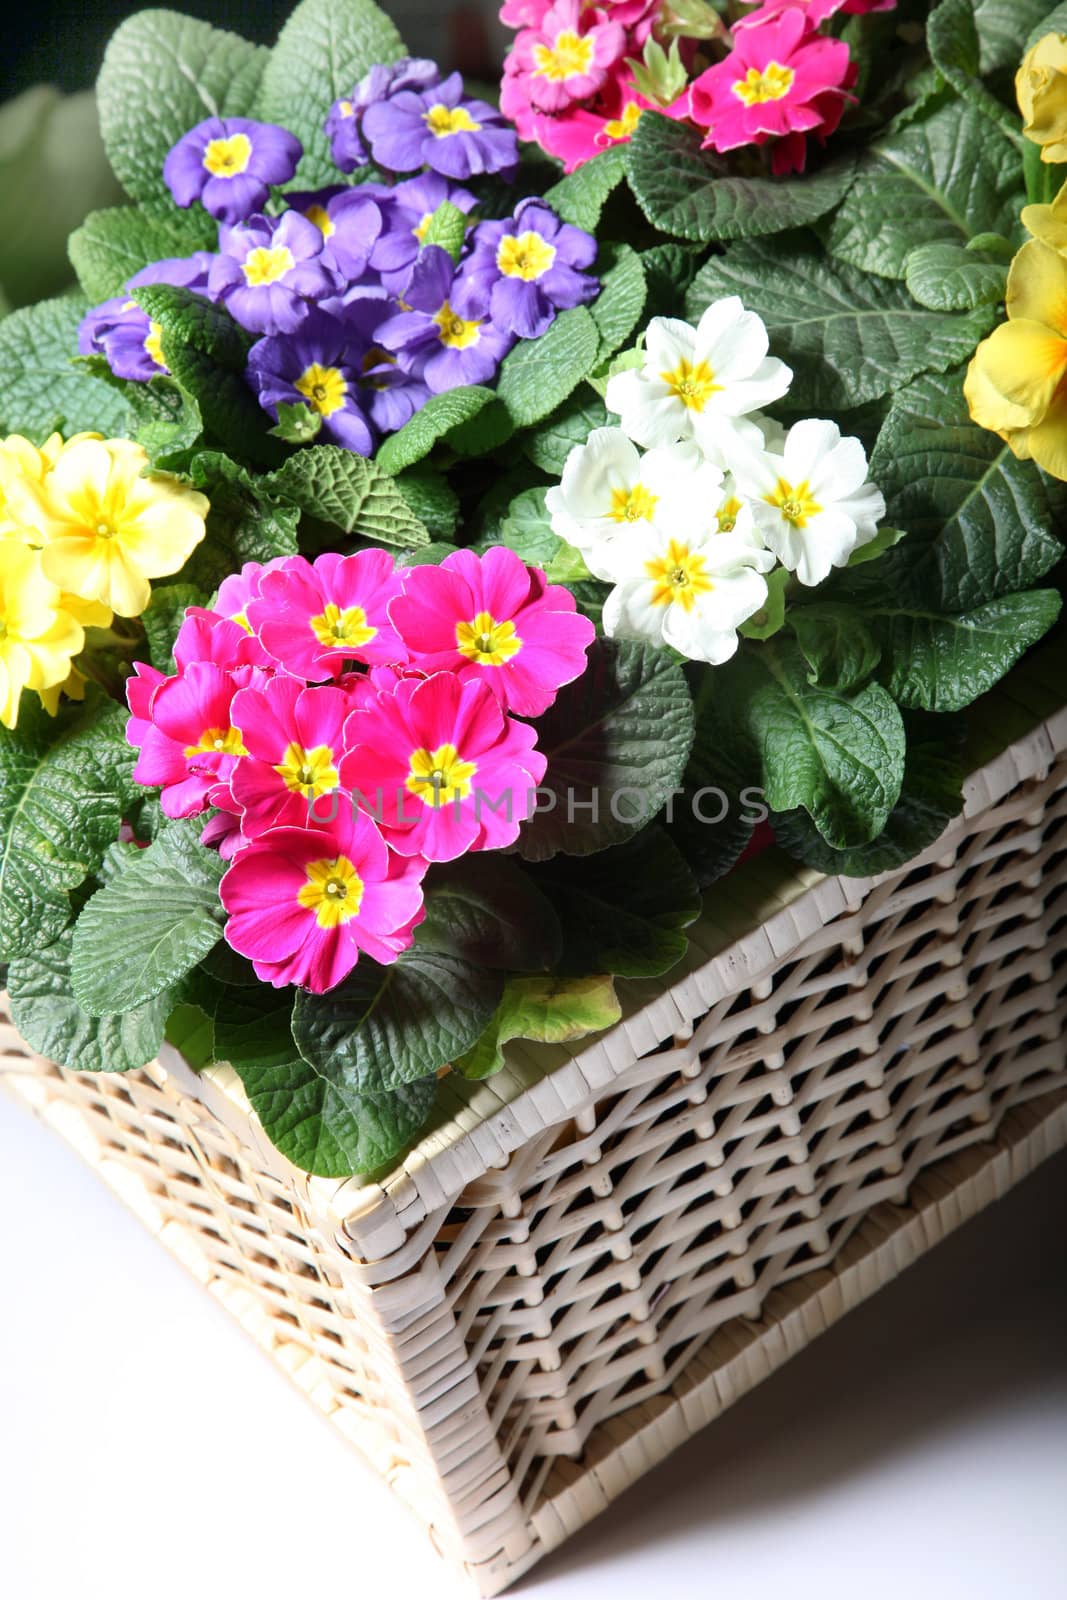 Colorful primroses in the basket - Closeup